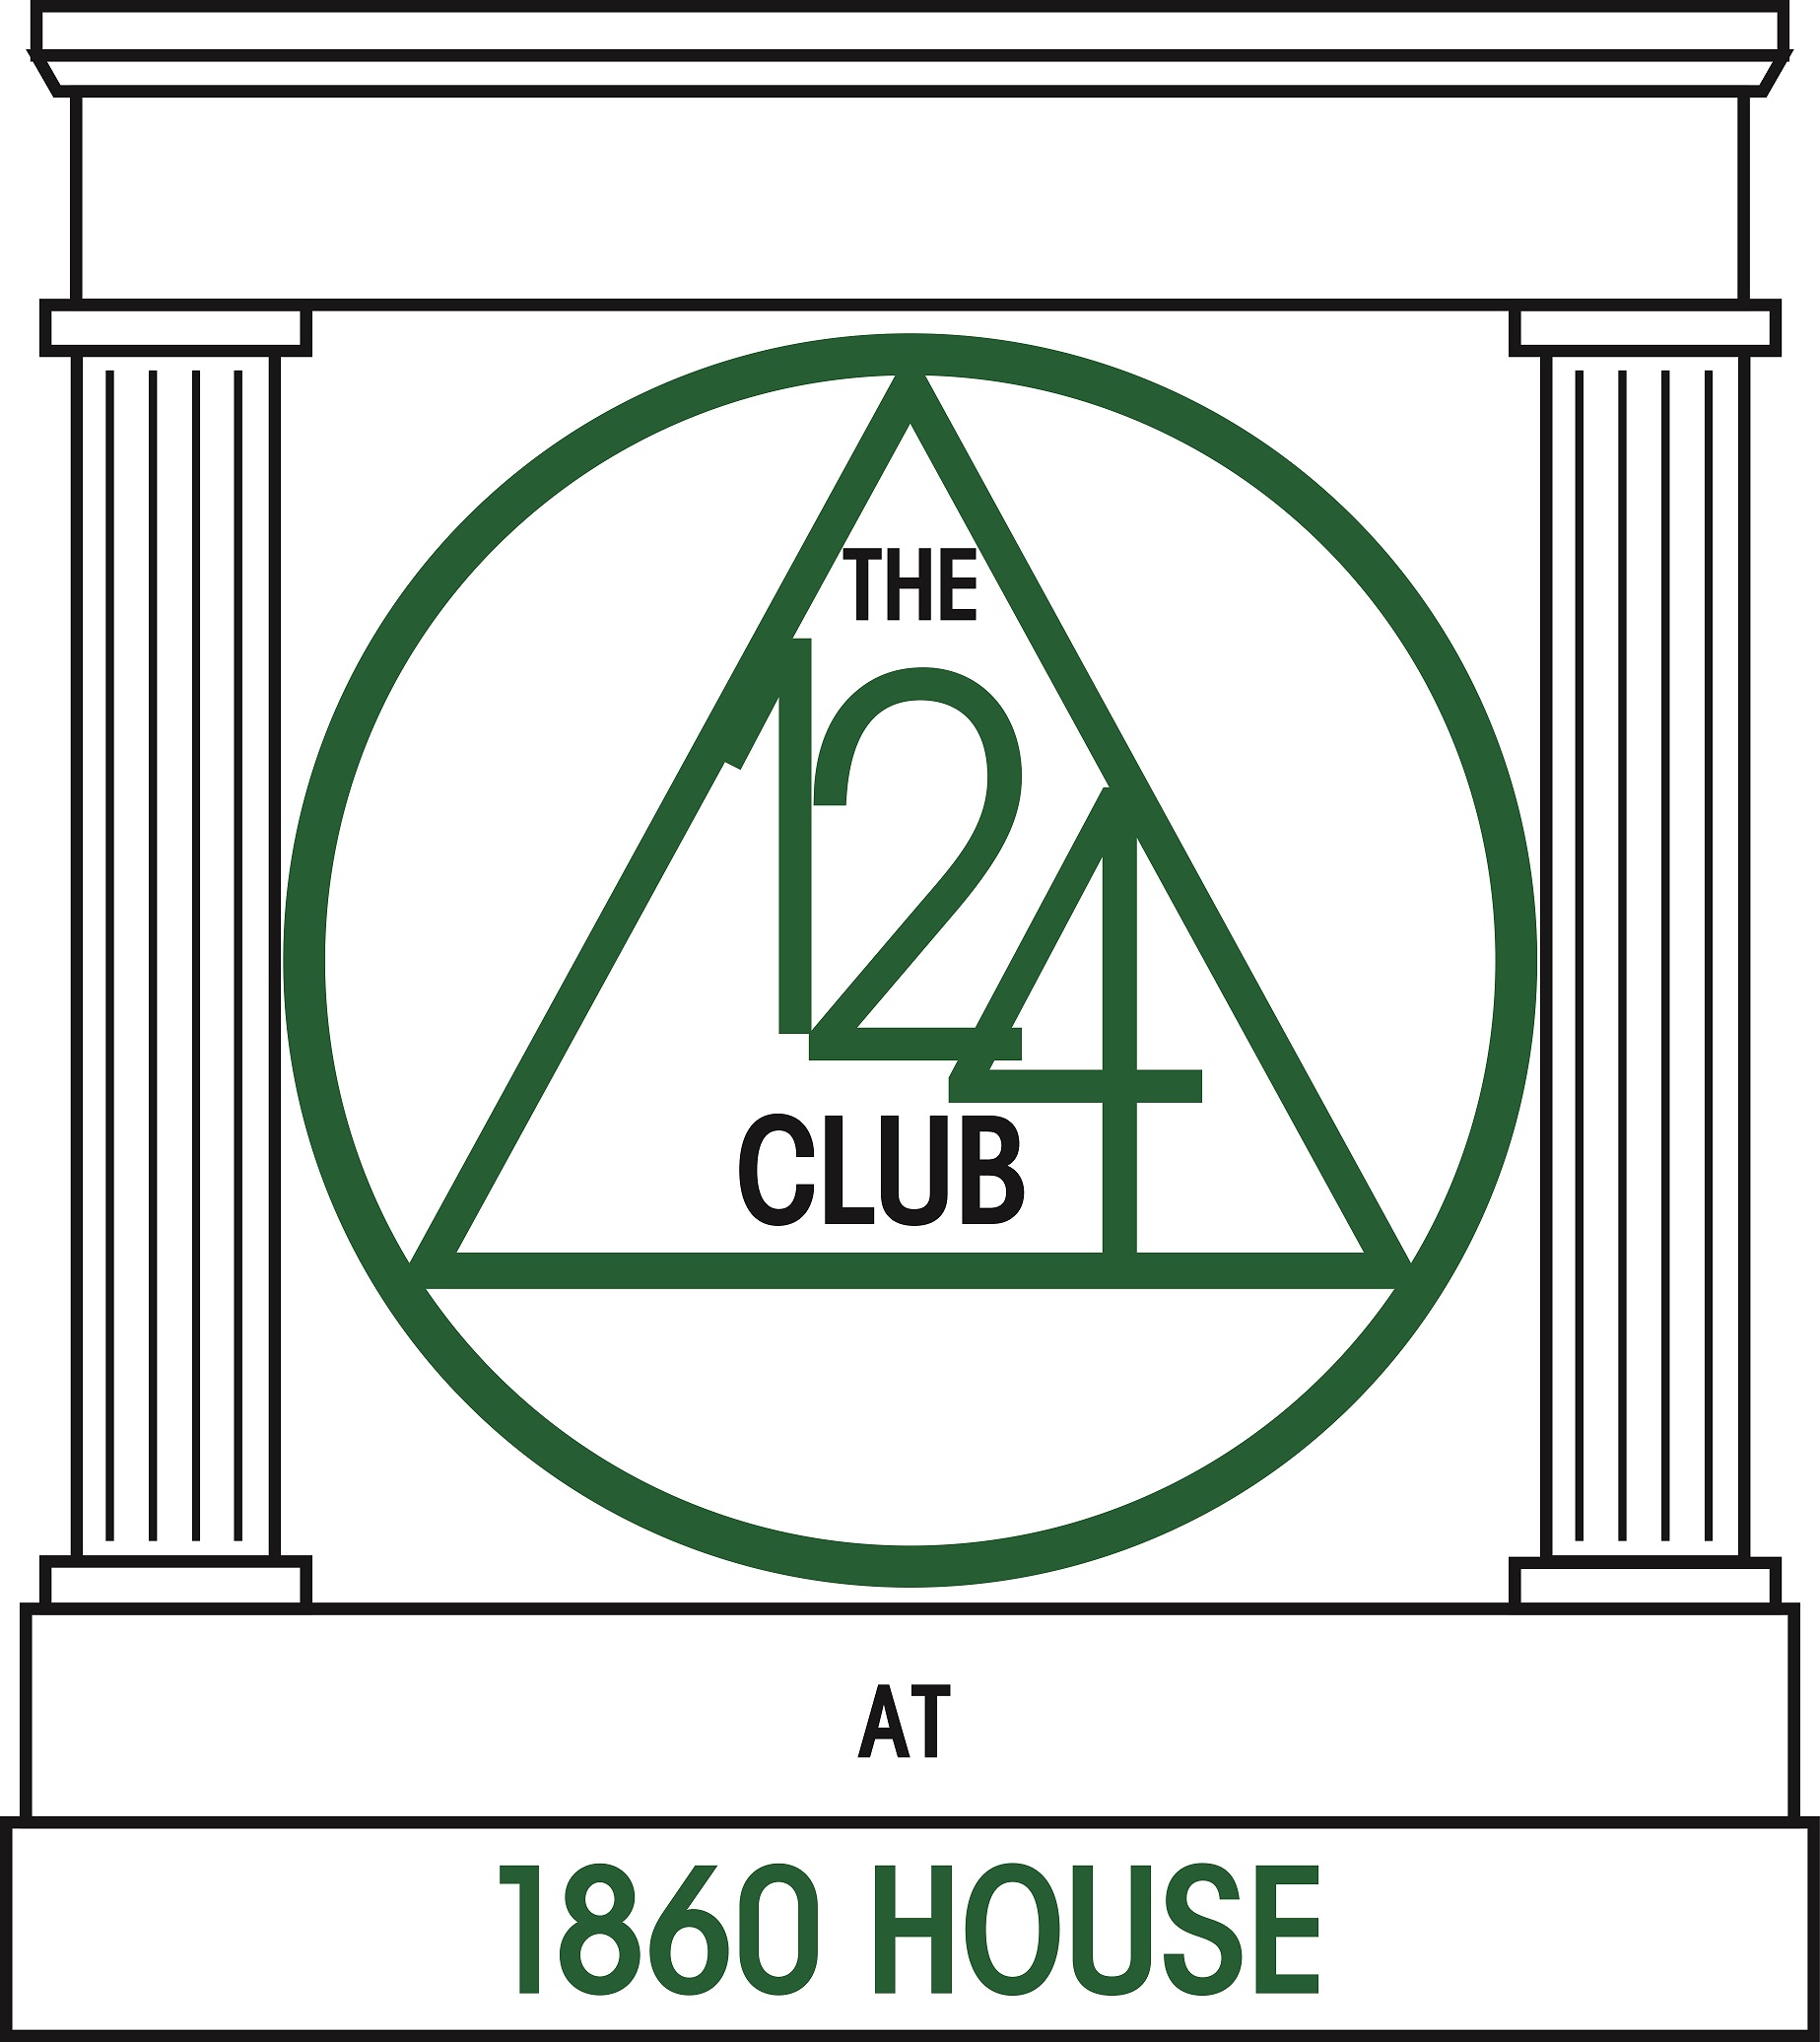 The 124 Club